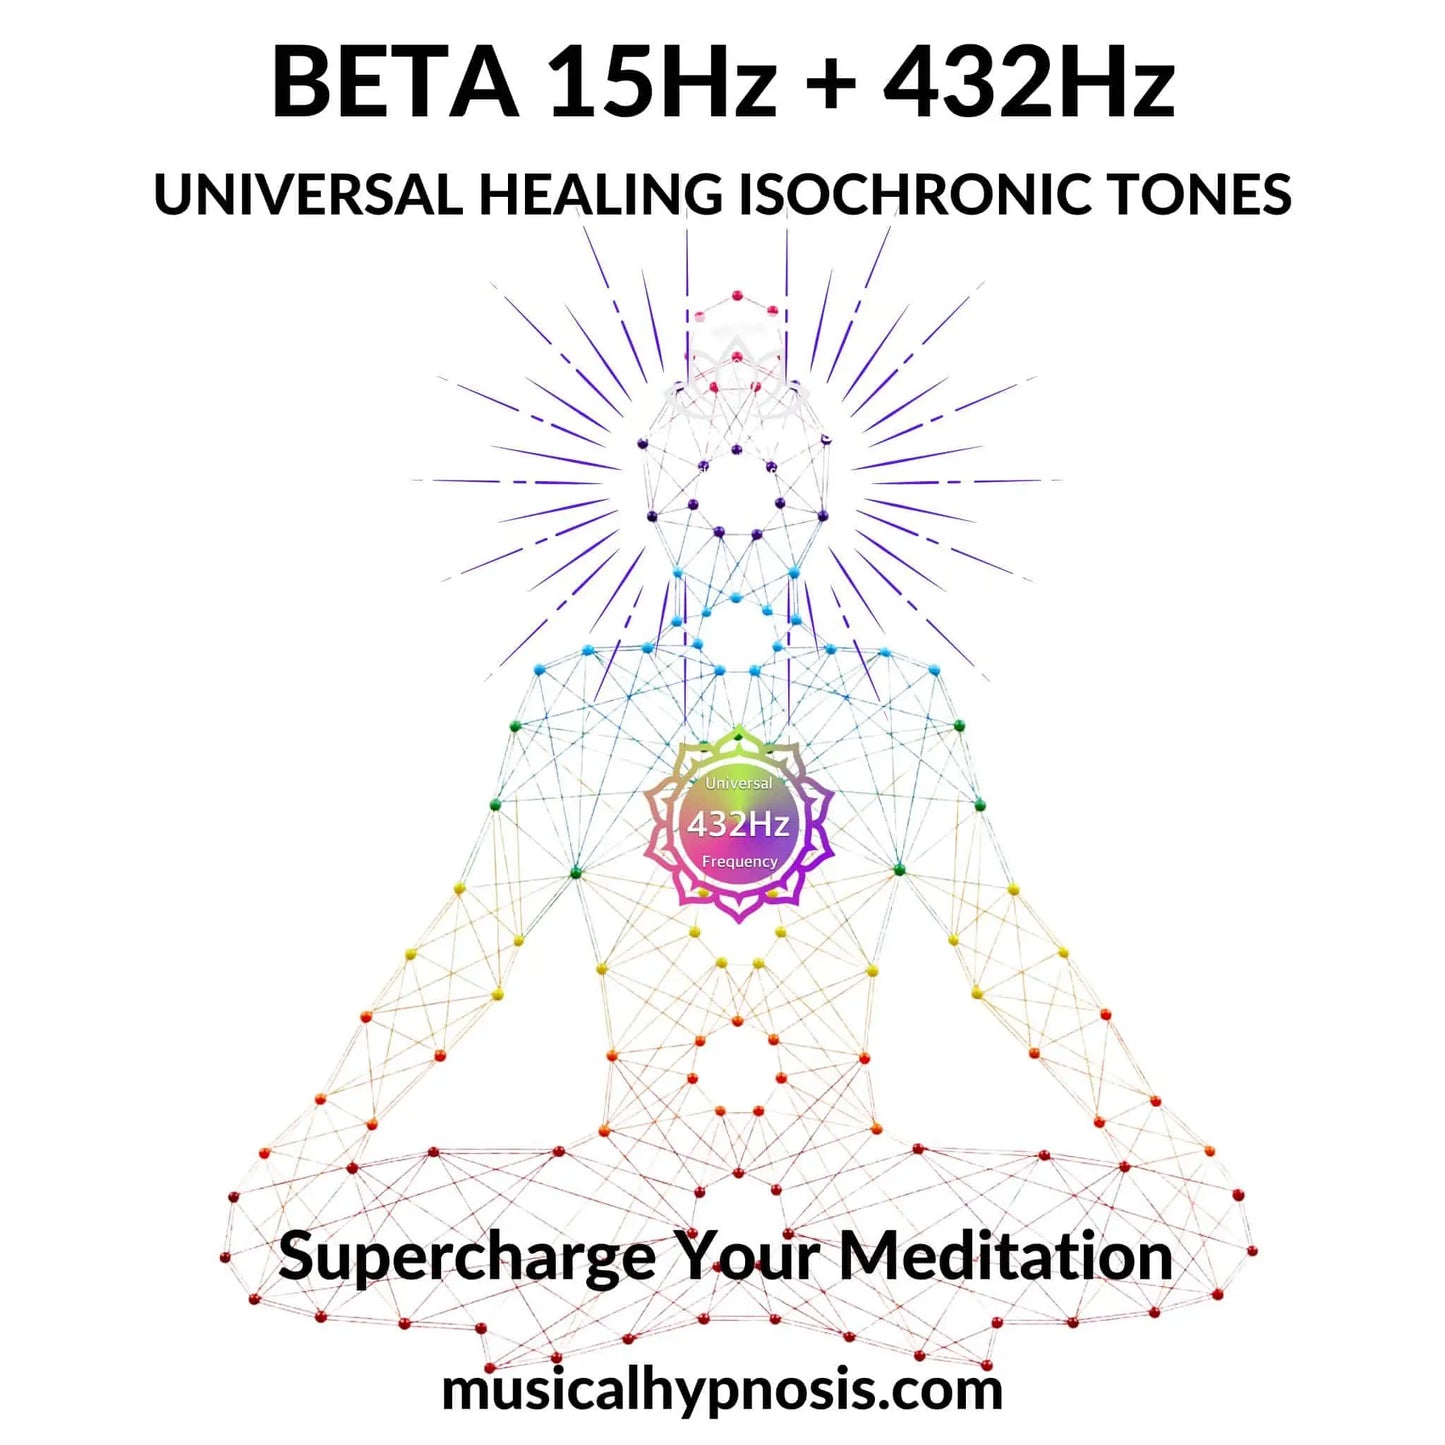 Beta 15Hz and 432Hz Universal Healing Isochronic Tones | 30 minutes